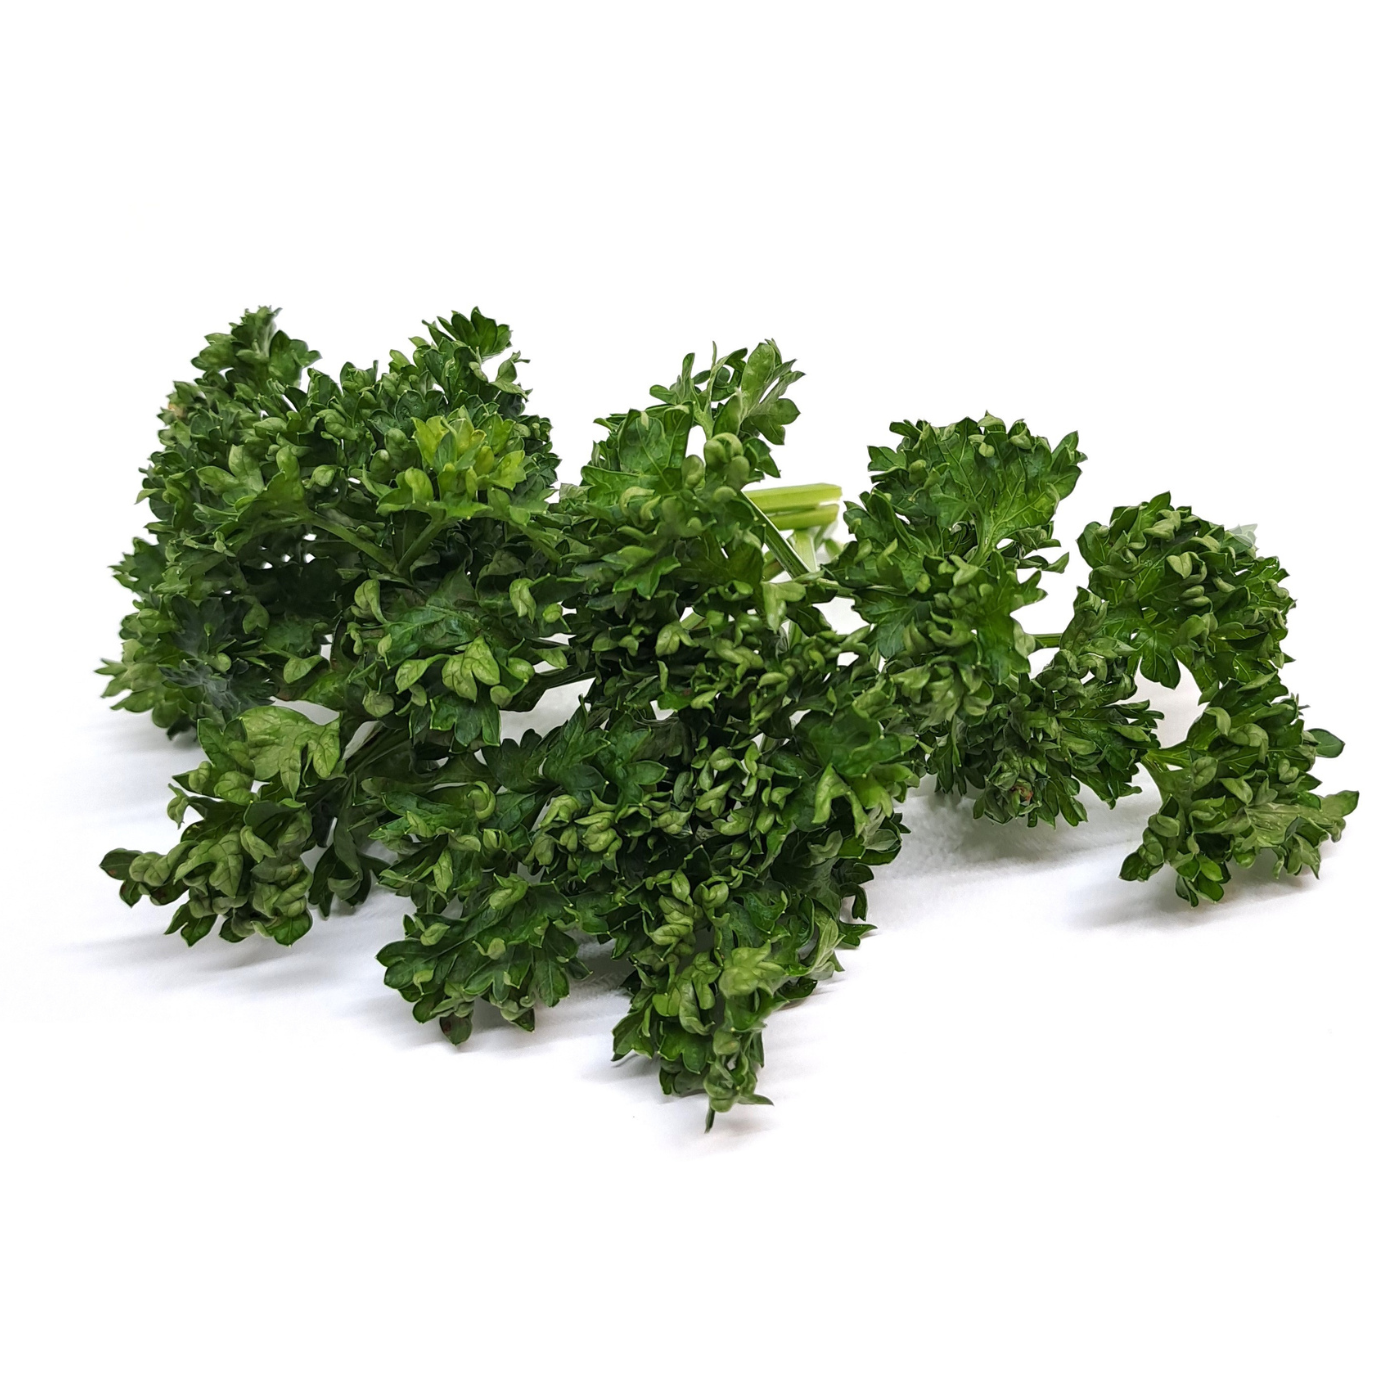 Organic curled parsley